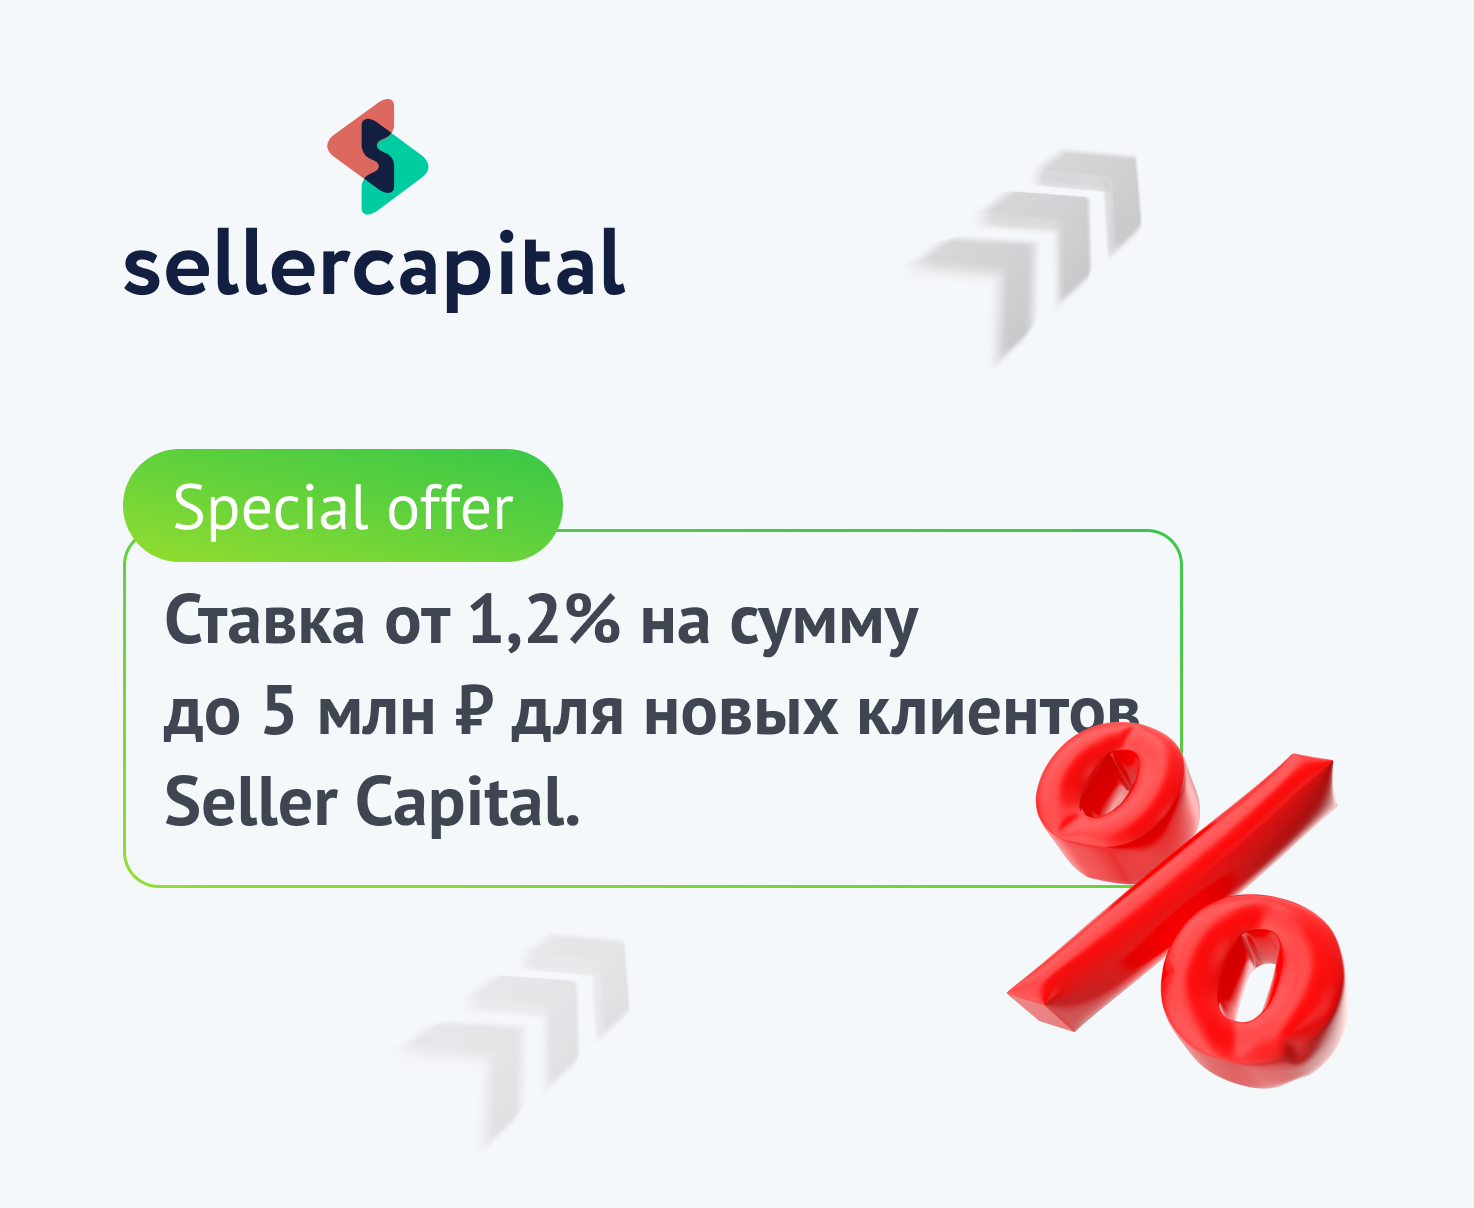 Seller Capital